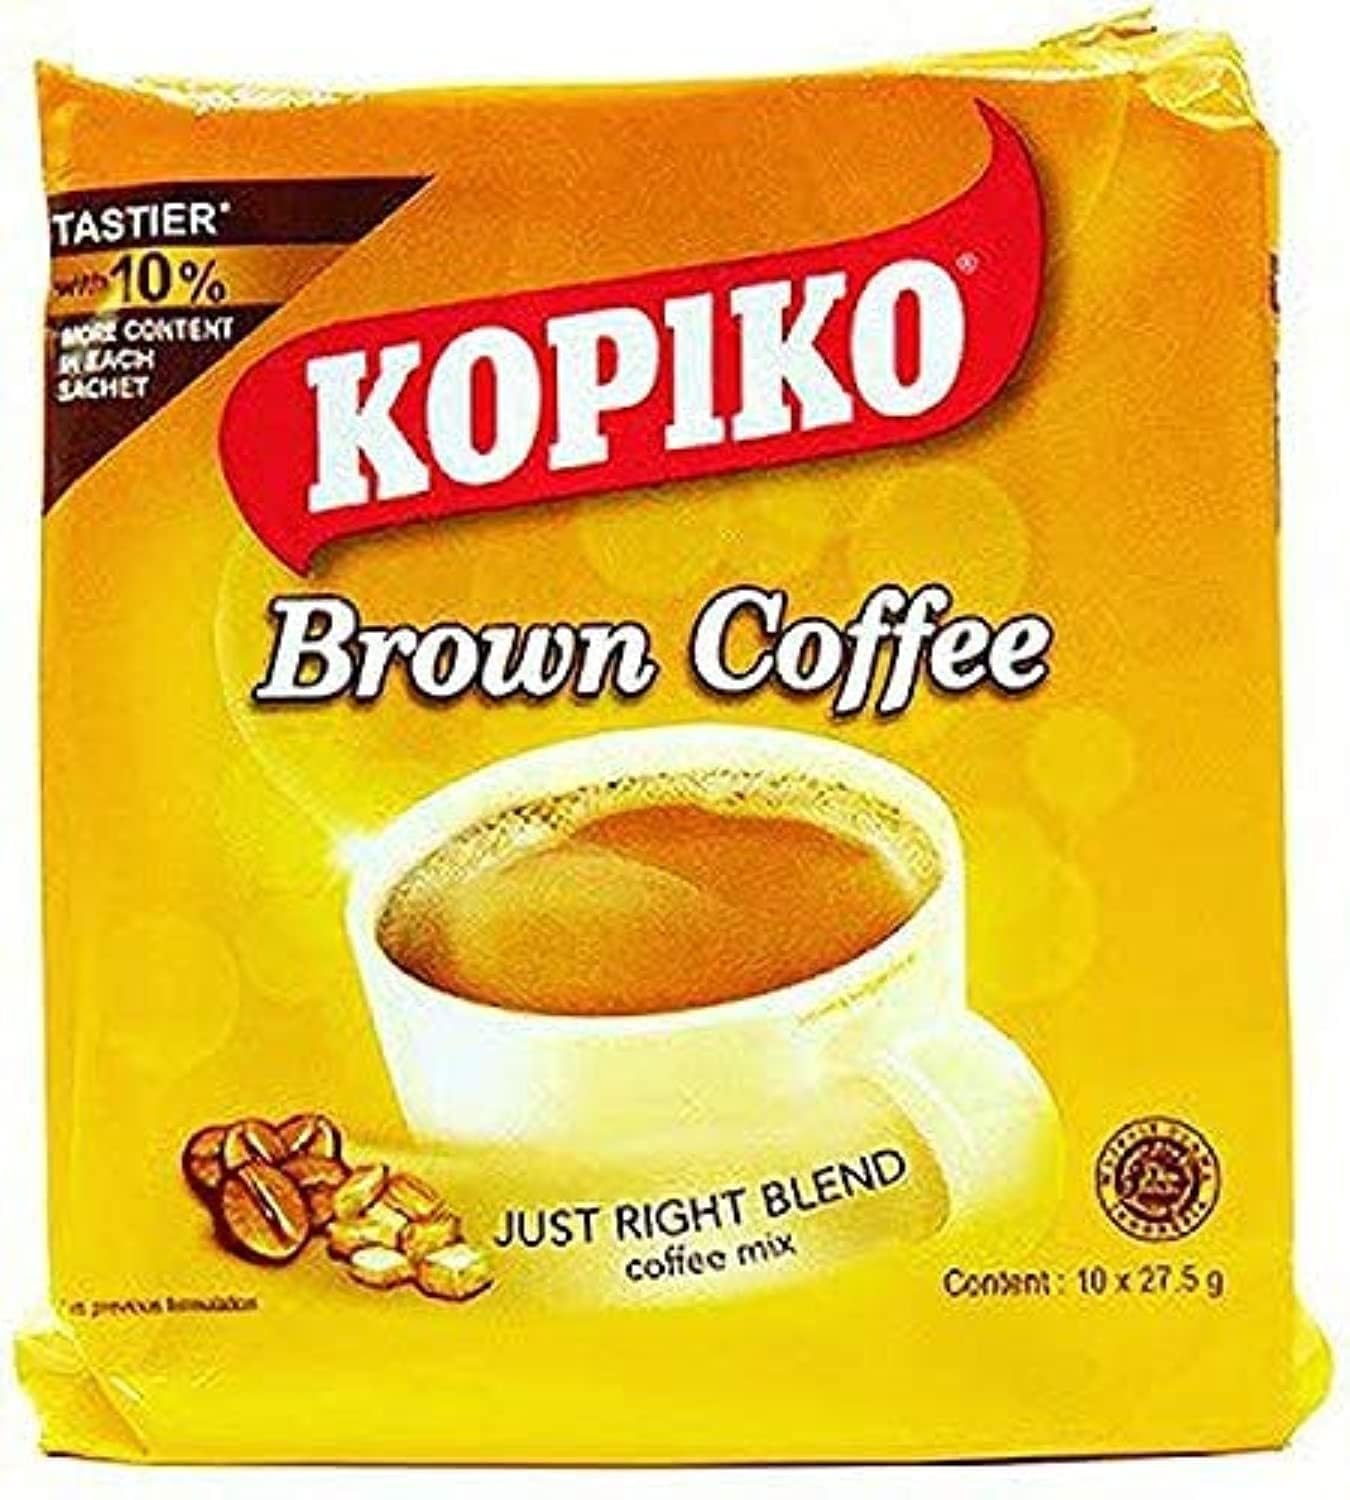 Kopiko Instant Brown Coffee, 8.8 oz (10 Sachets), 3 Bags